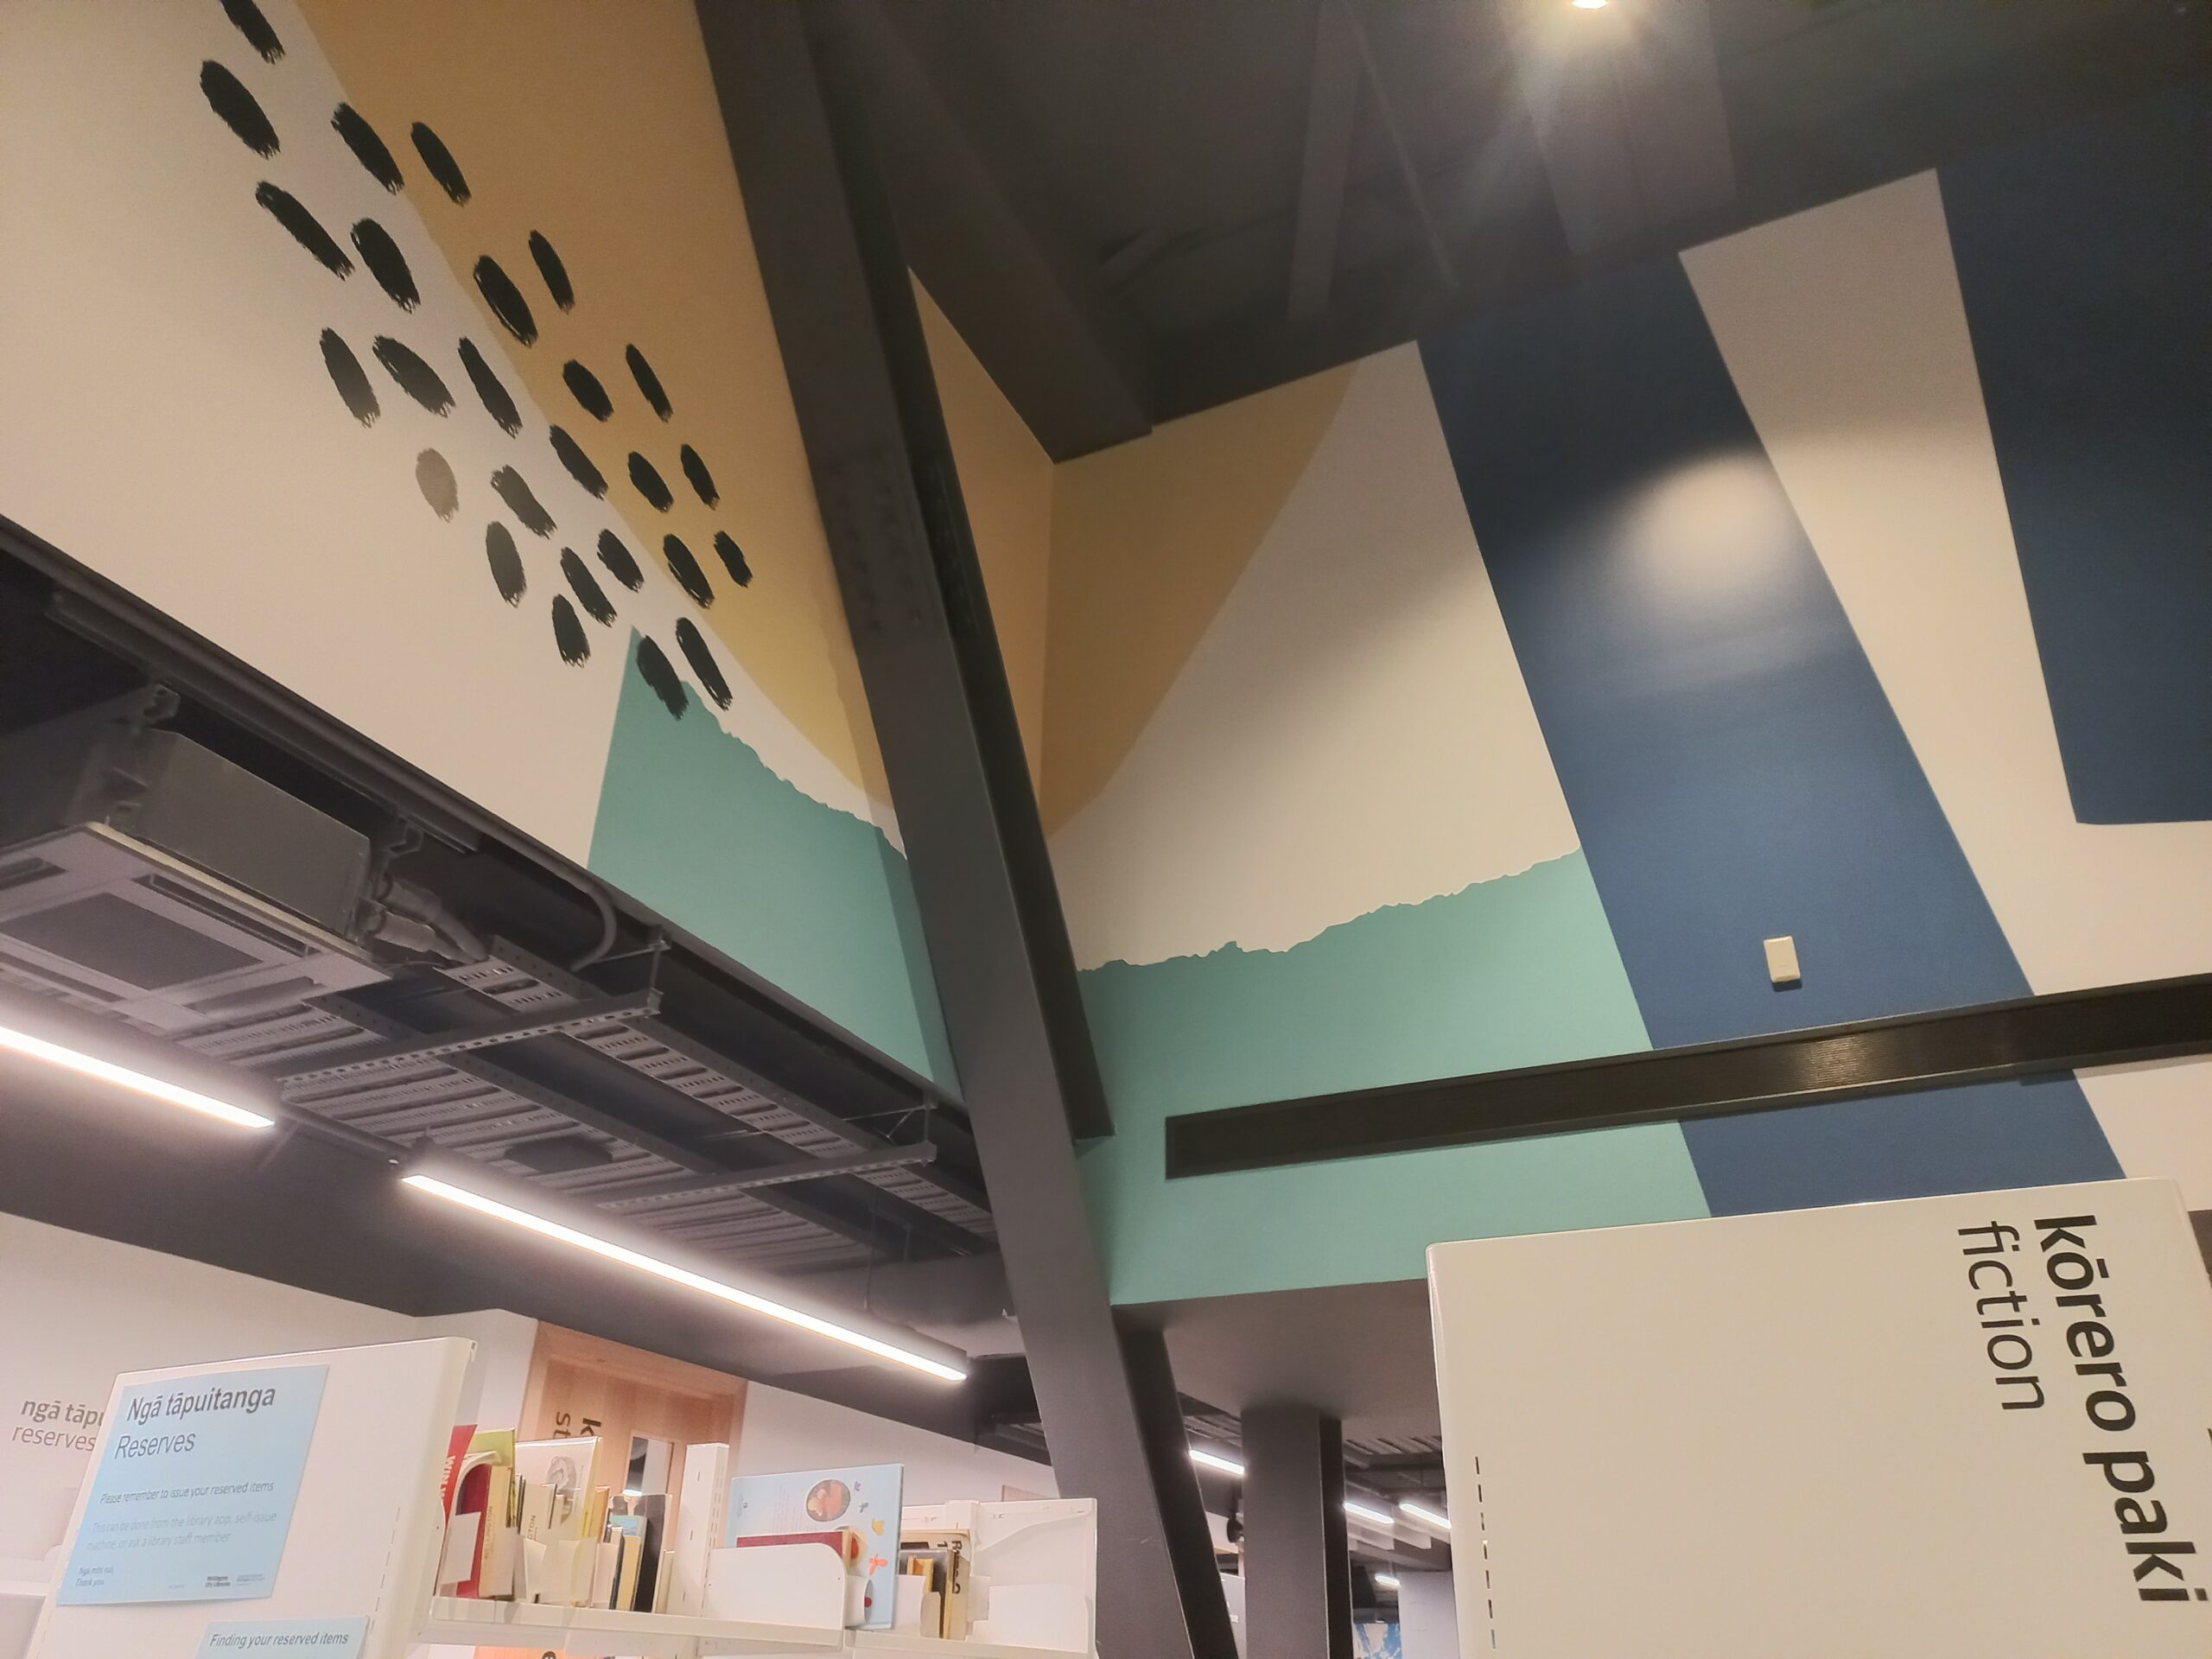 Diagonal industrial beam cuts across decorated upper walls above fiction shelves